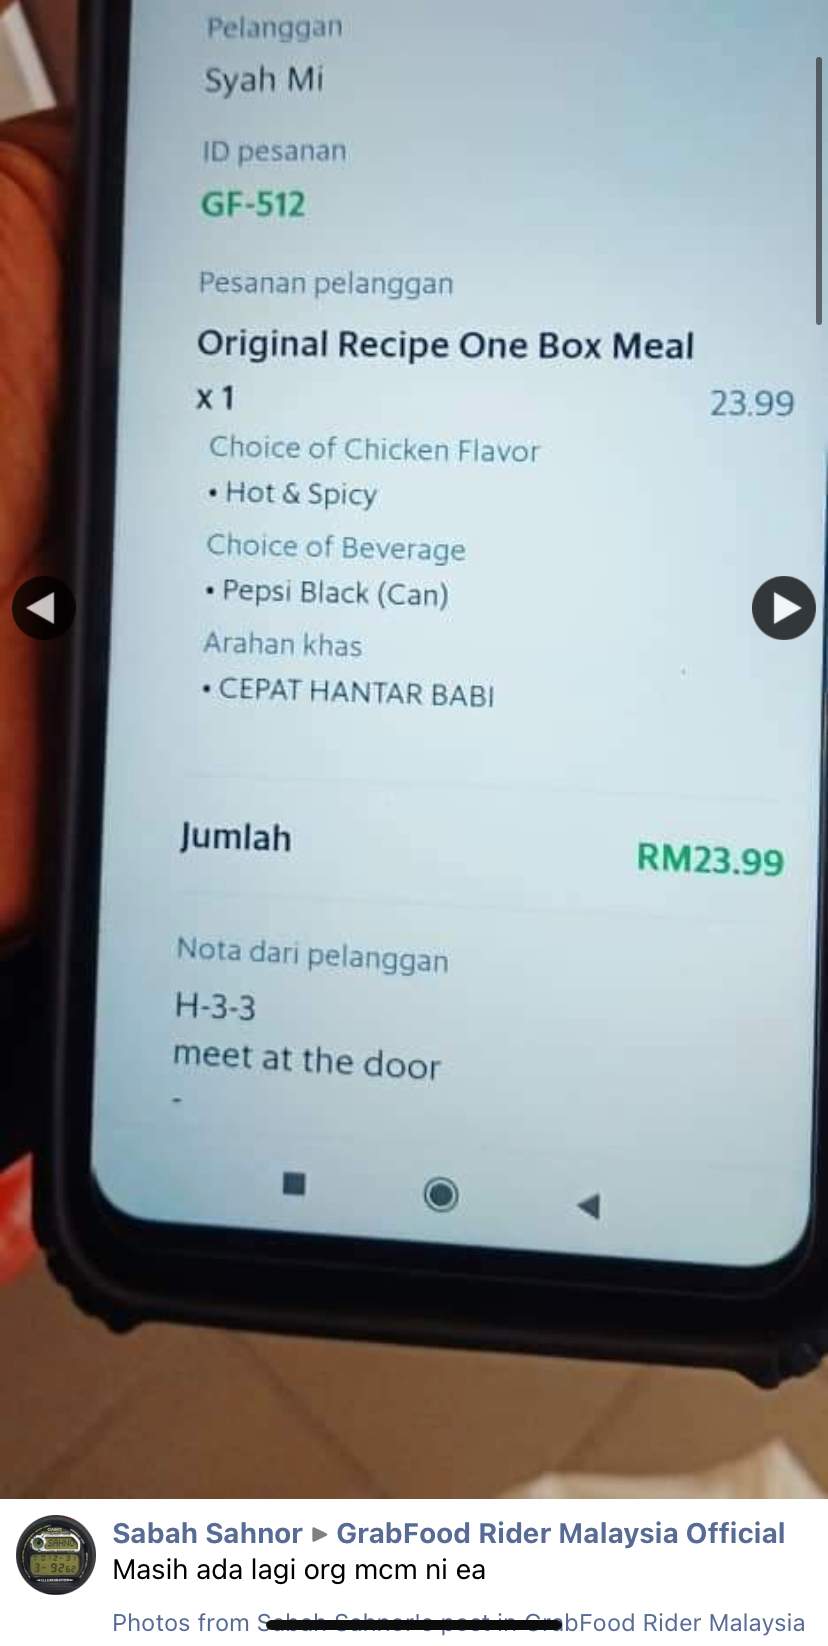 “cepat hantar bab*! ” grabfood rider shares rude instruction received from customer